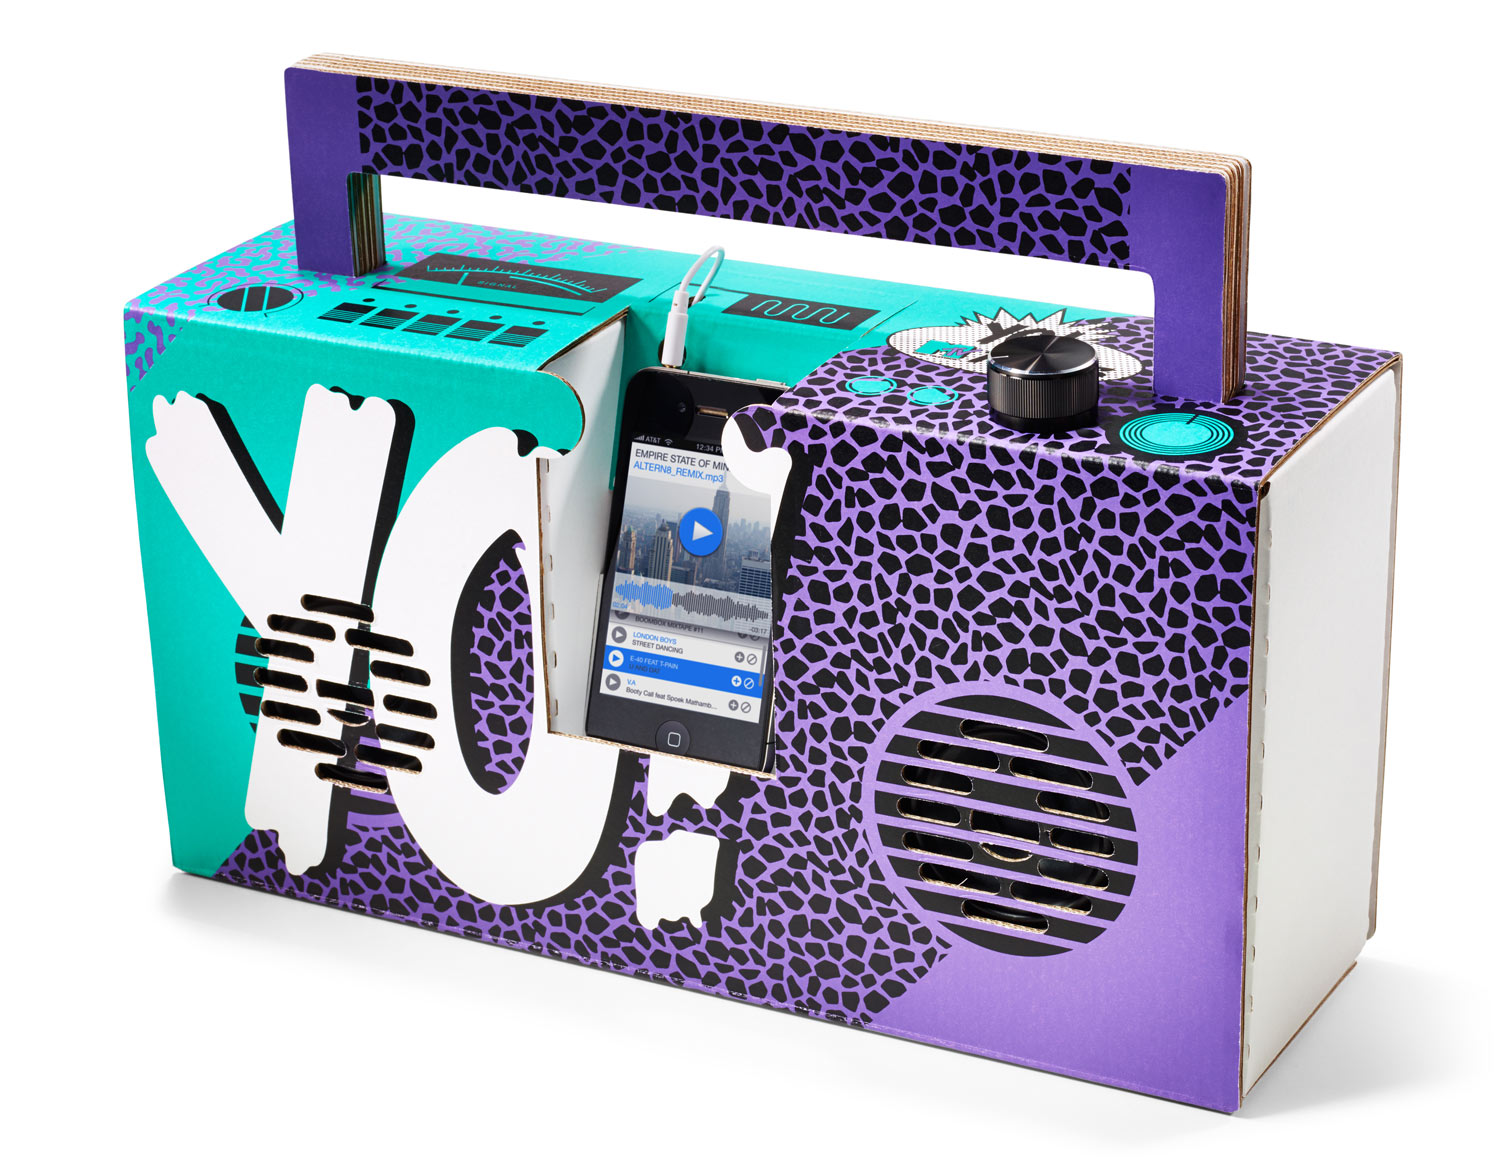 Yo! MTV Raps Boombox by Berlin Boombox. Designed by Axel Pfaender